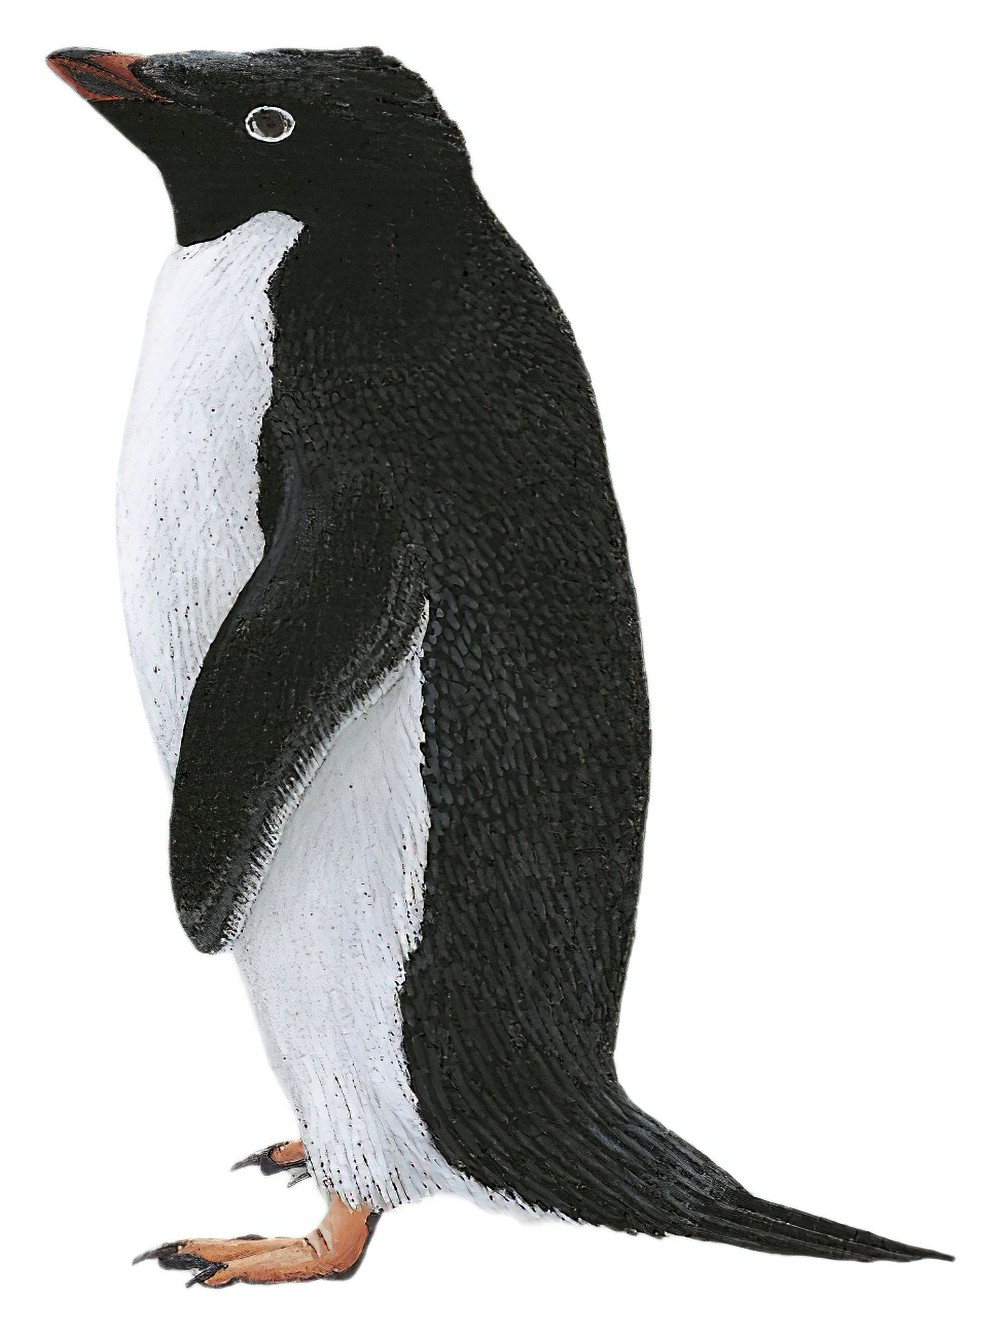 Adelie Penguin / Pygoscelis adeliae